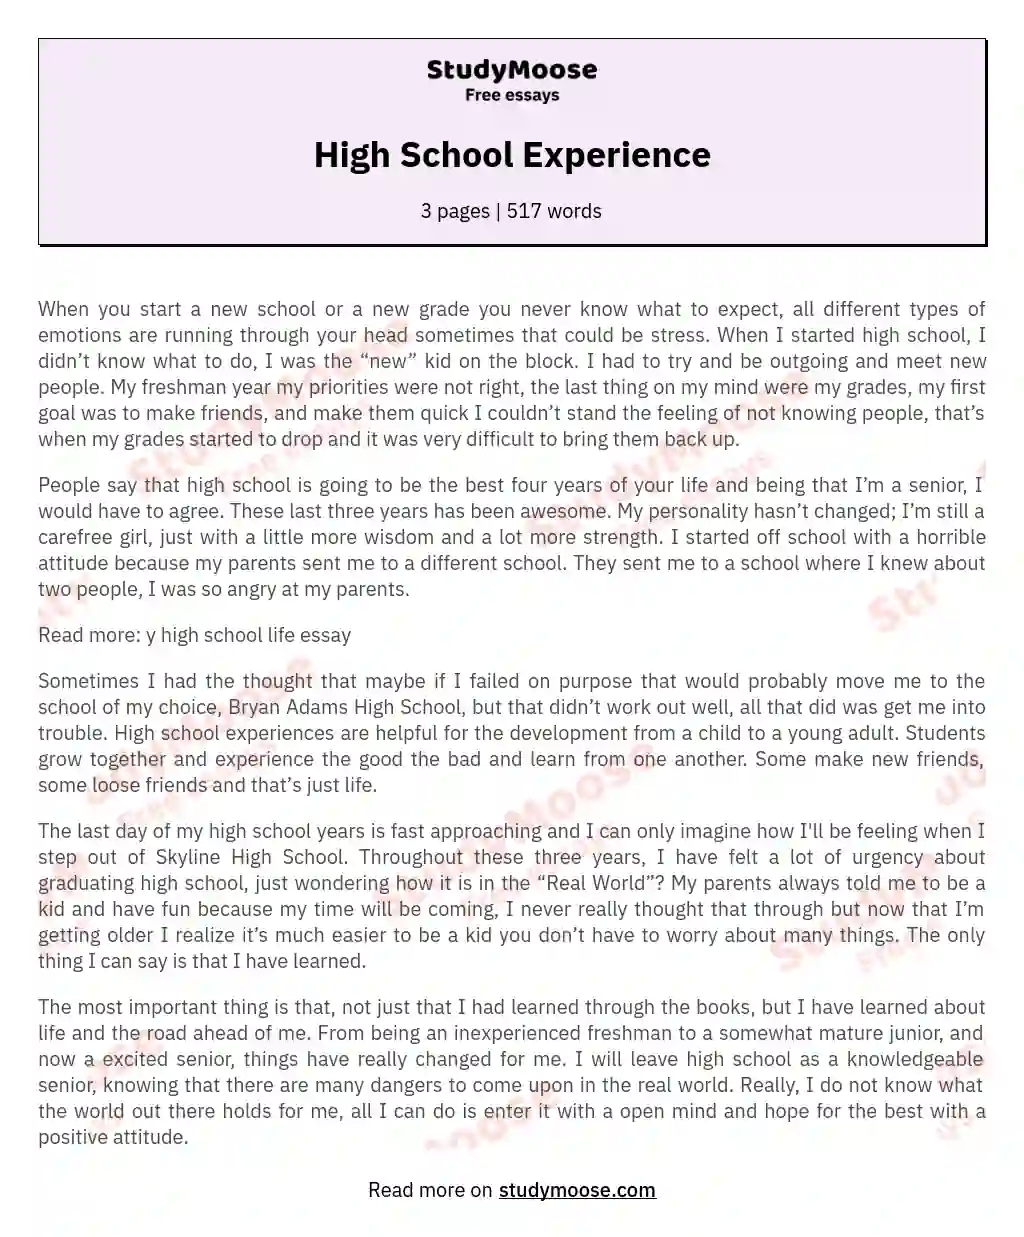 High School Experience essay